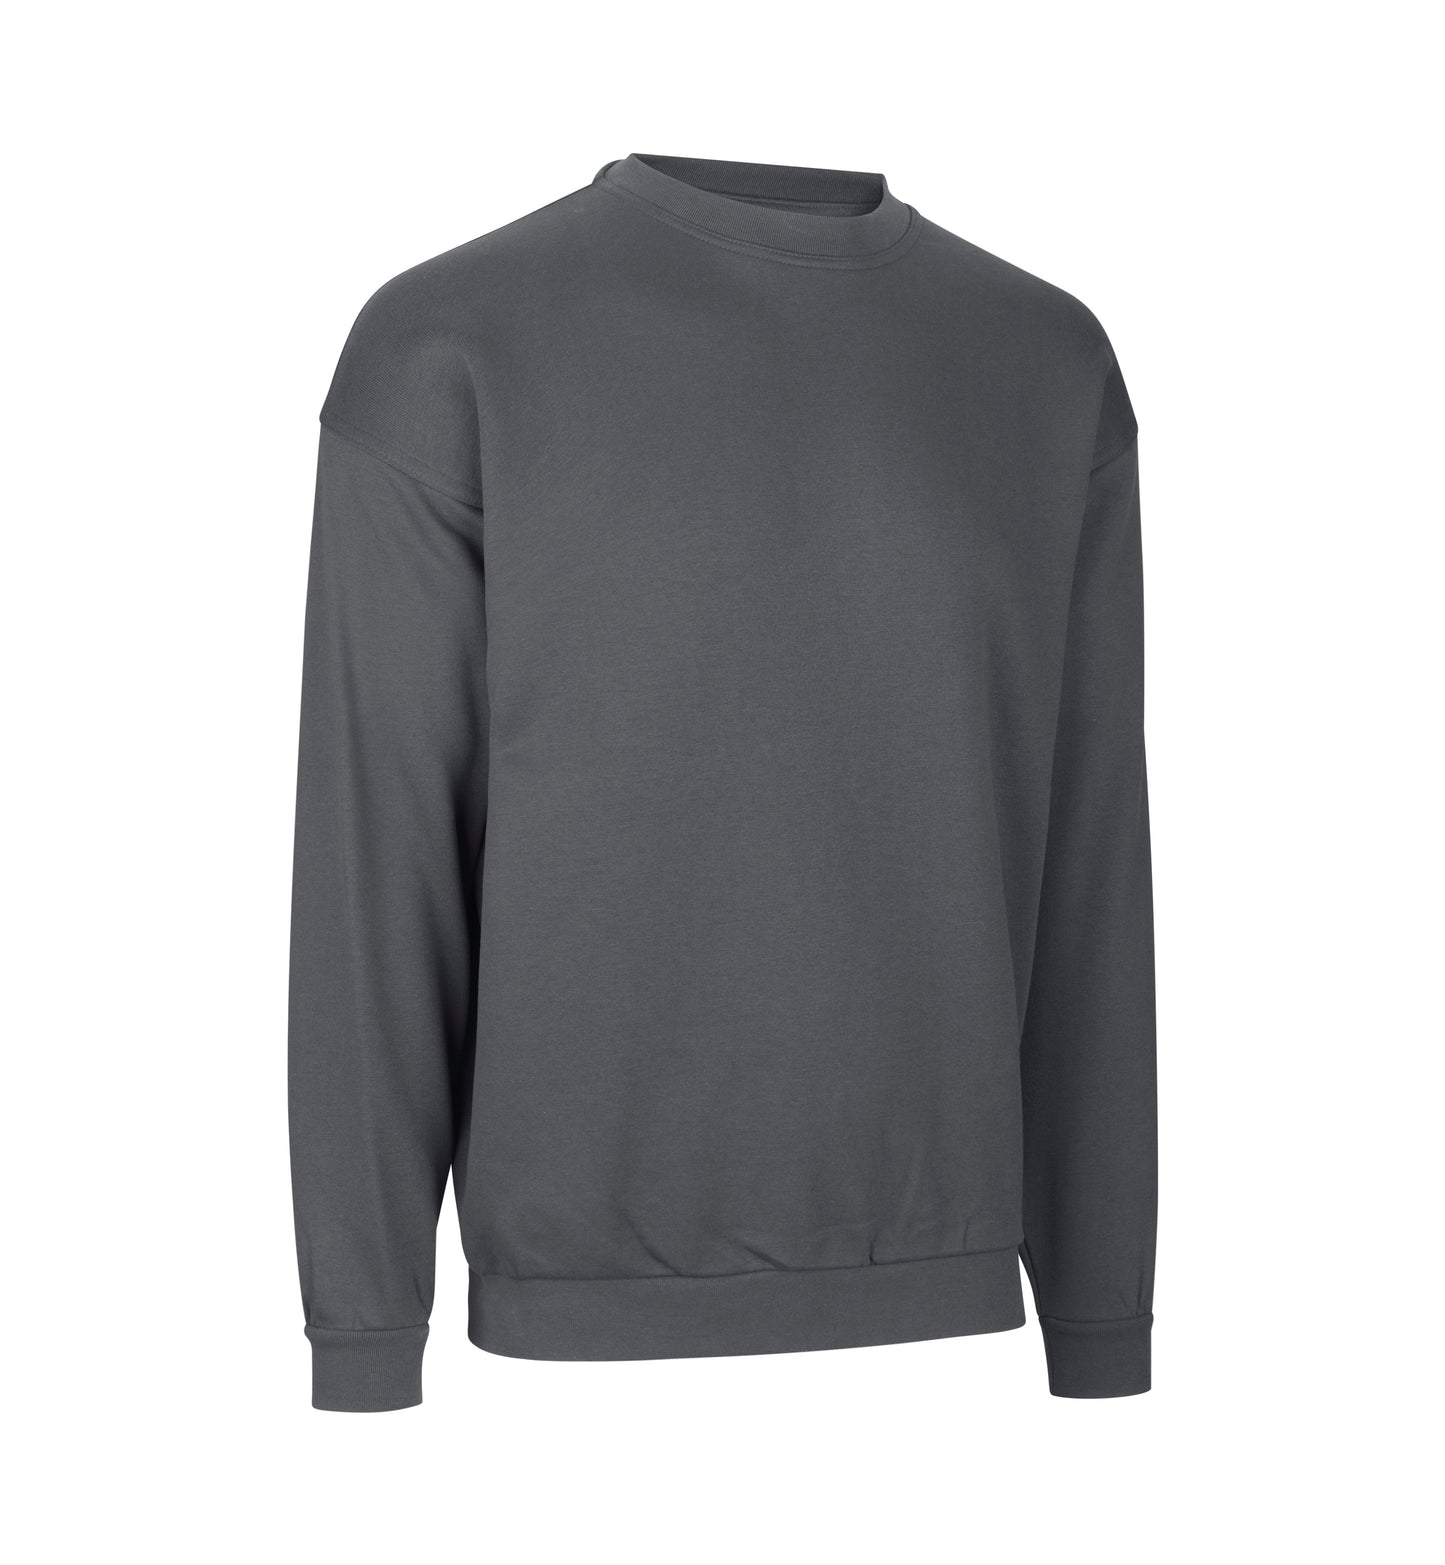 ID PRO Wear sweatshirt classic 0360 (Private Sale)